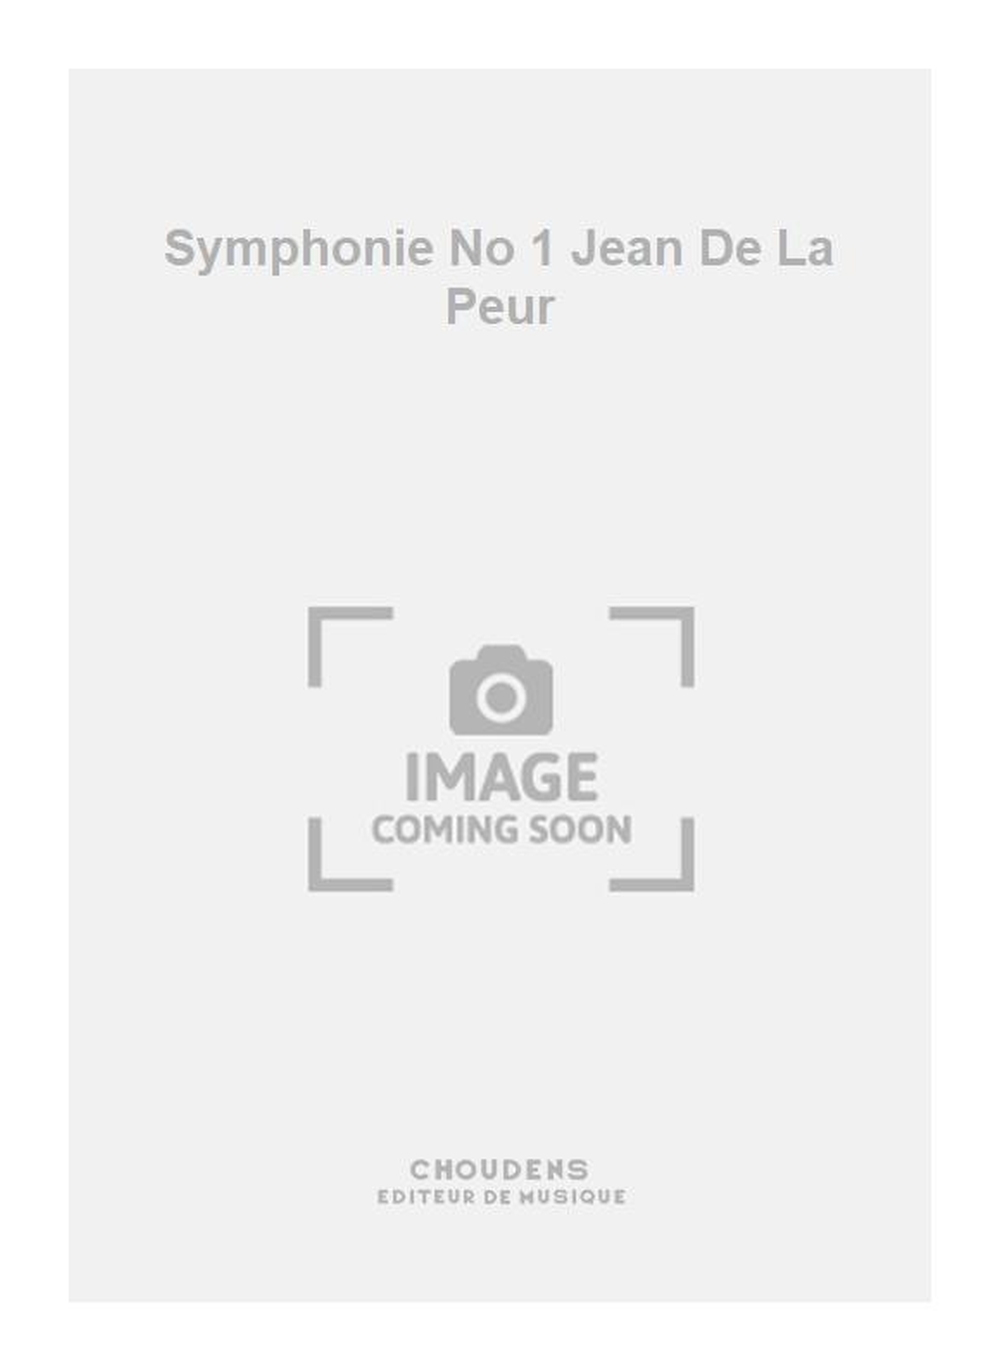 Marcel Landowski: Symphonie No 1 Jean De La Peur